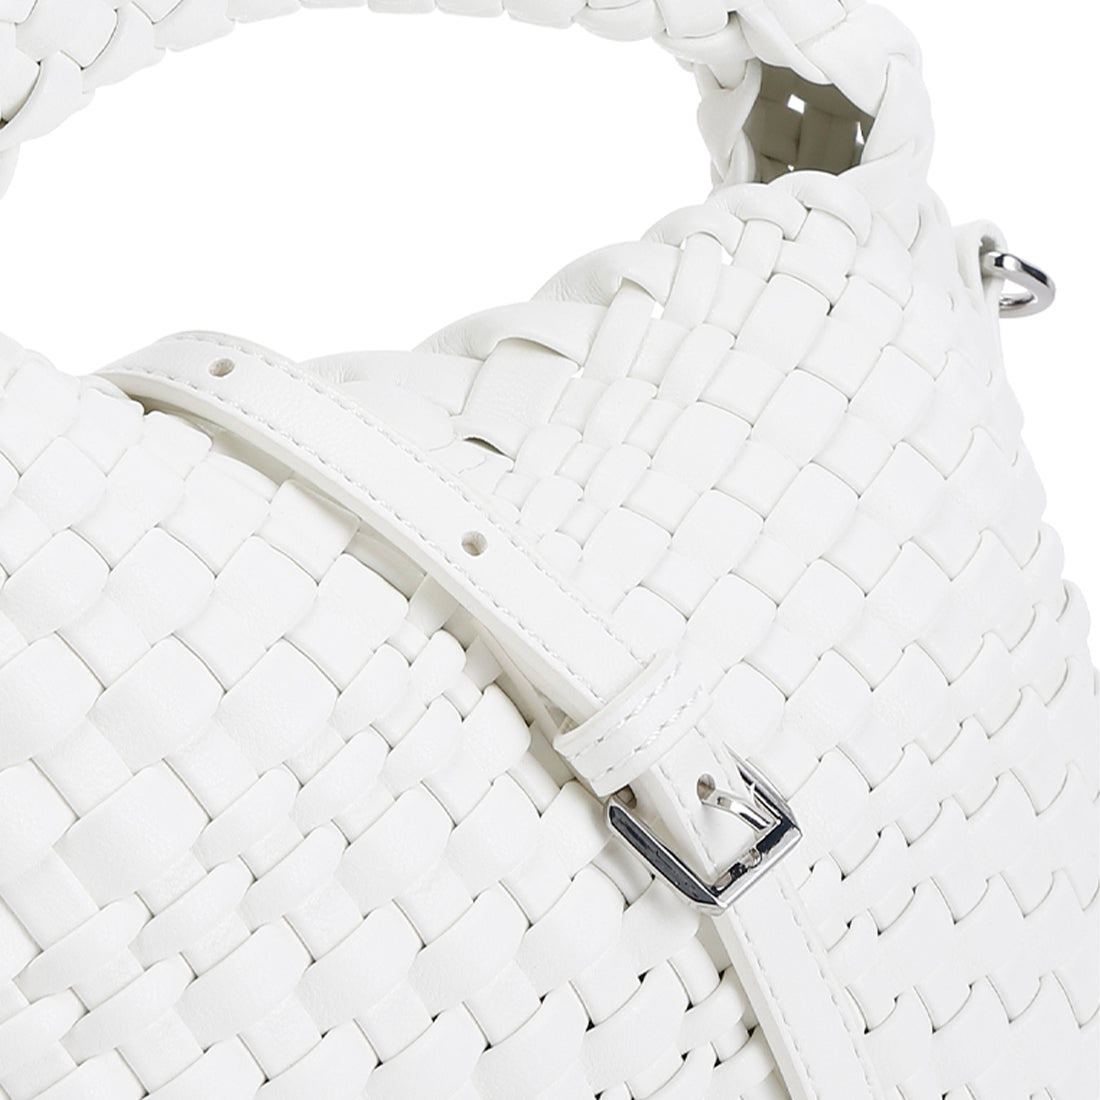 mini woven handbag#color_white